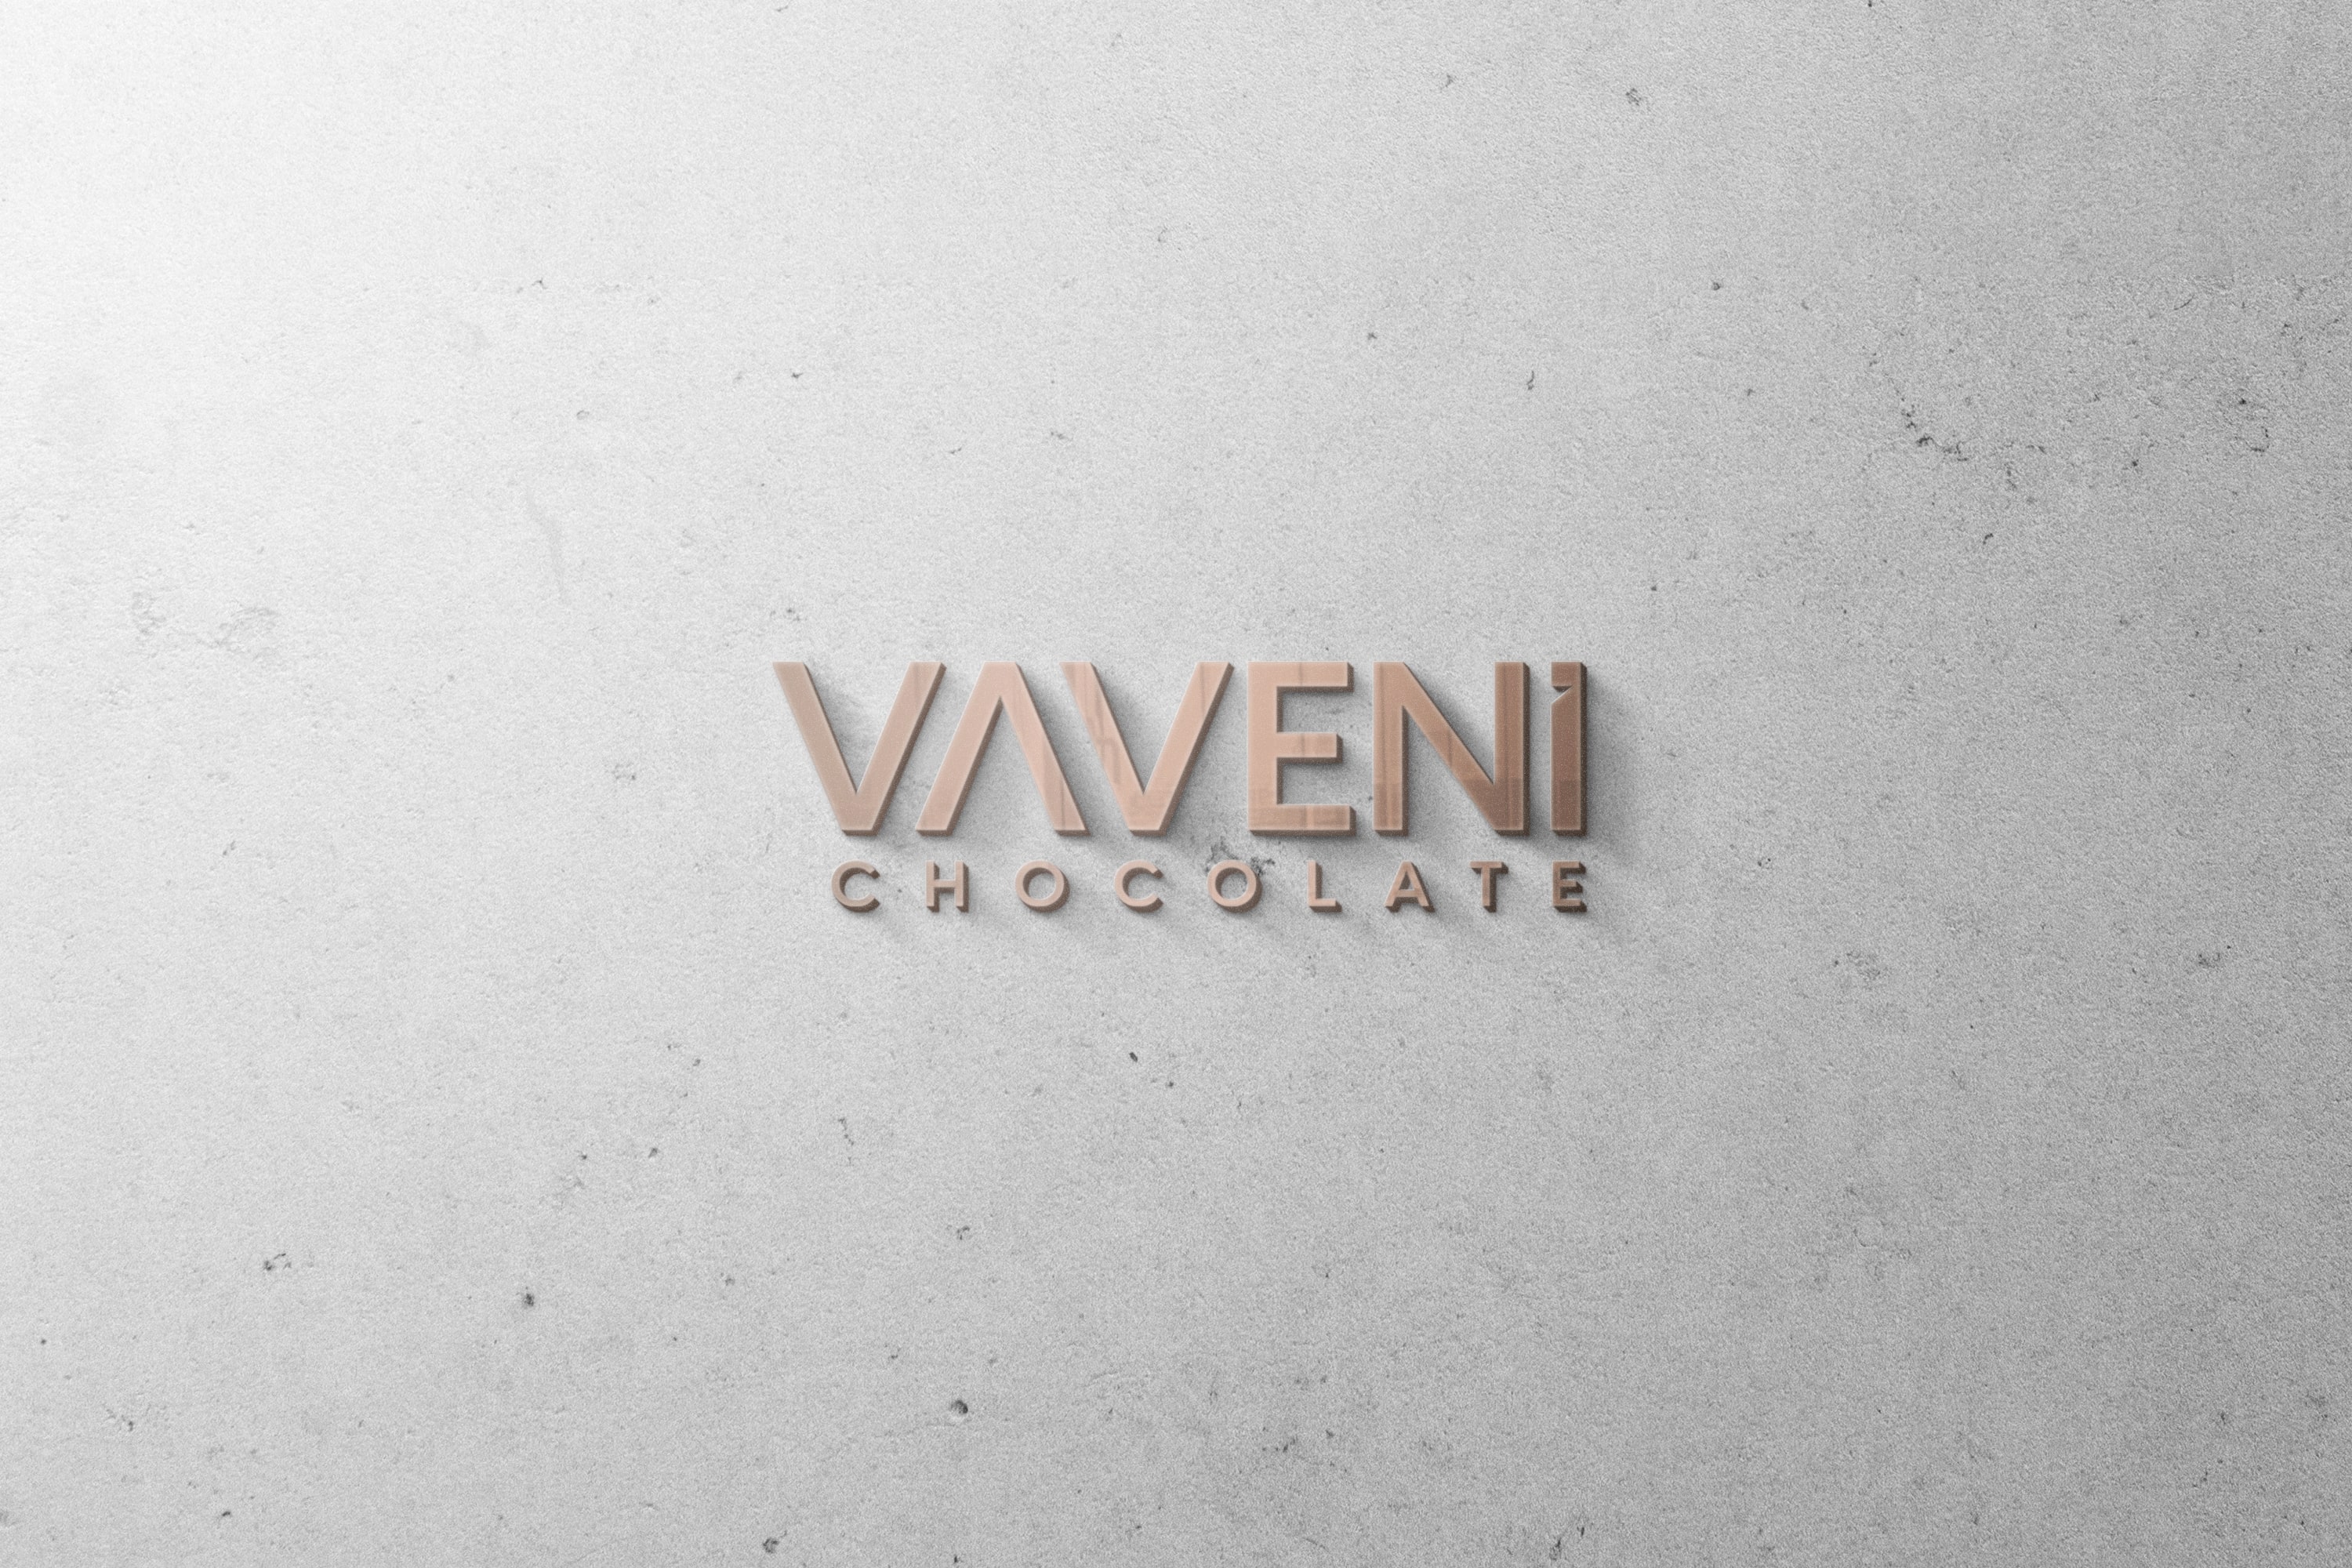 Vaveni Chocolate